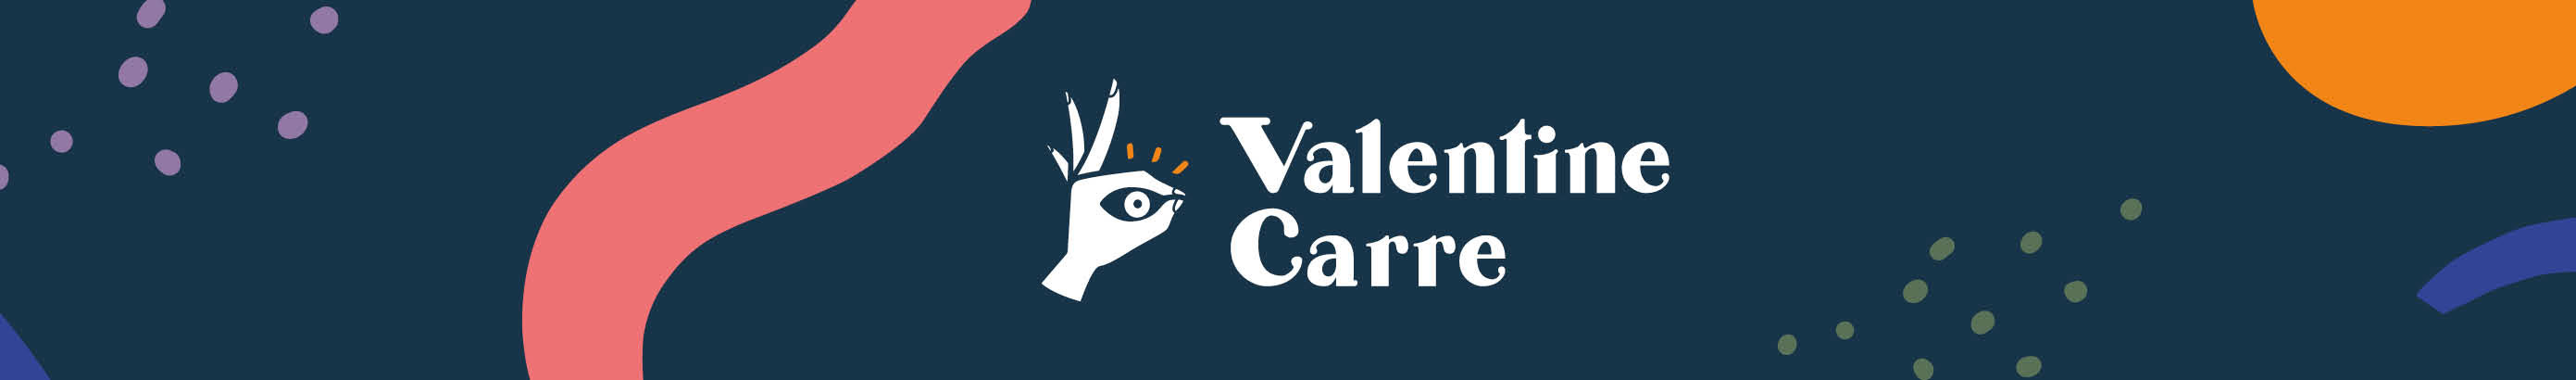 ✳ Valentine ✳ Carre ✳ のプロファイルバナー